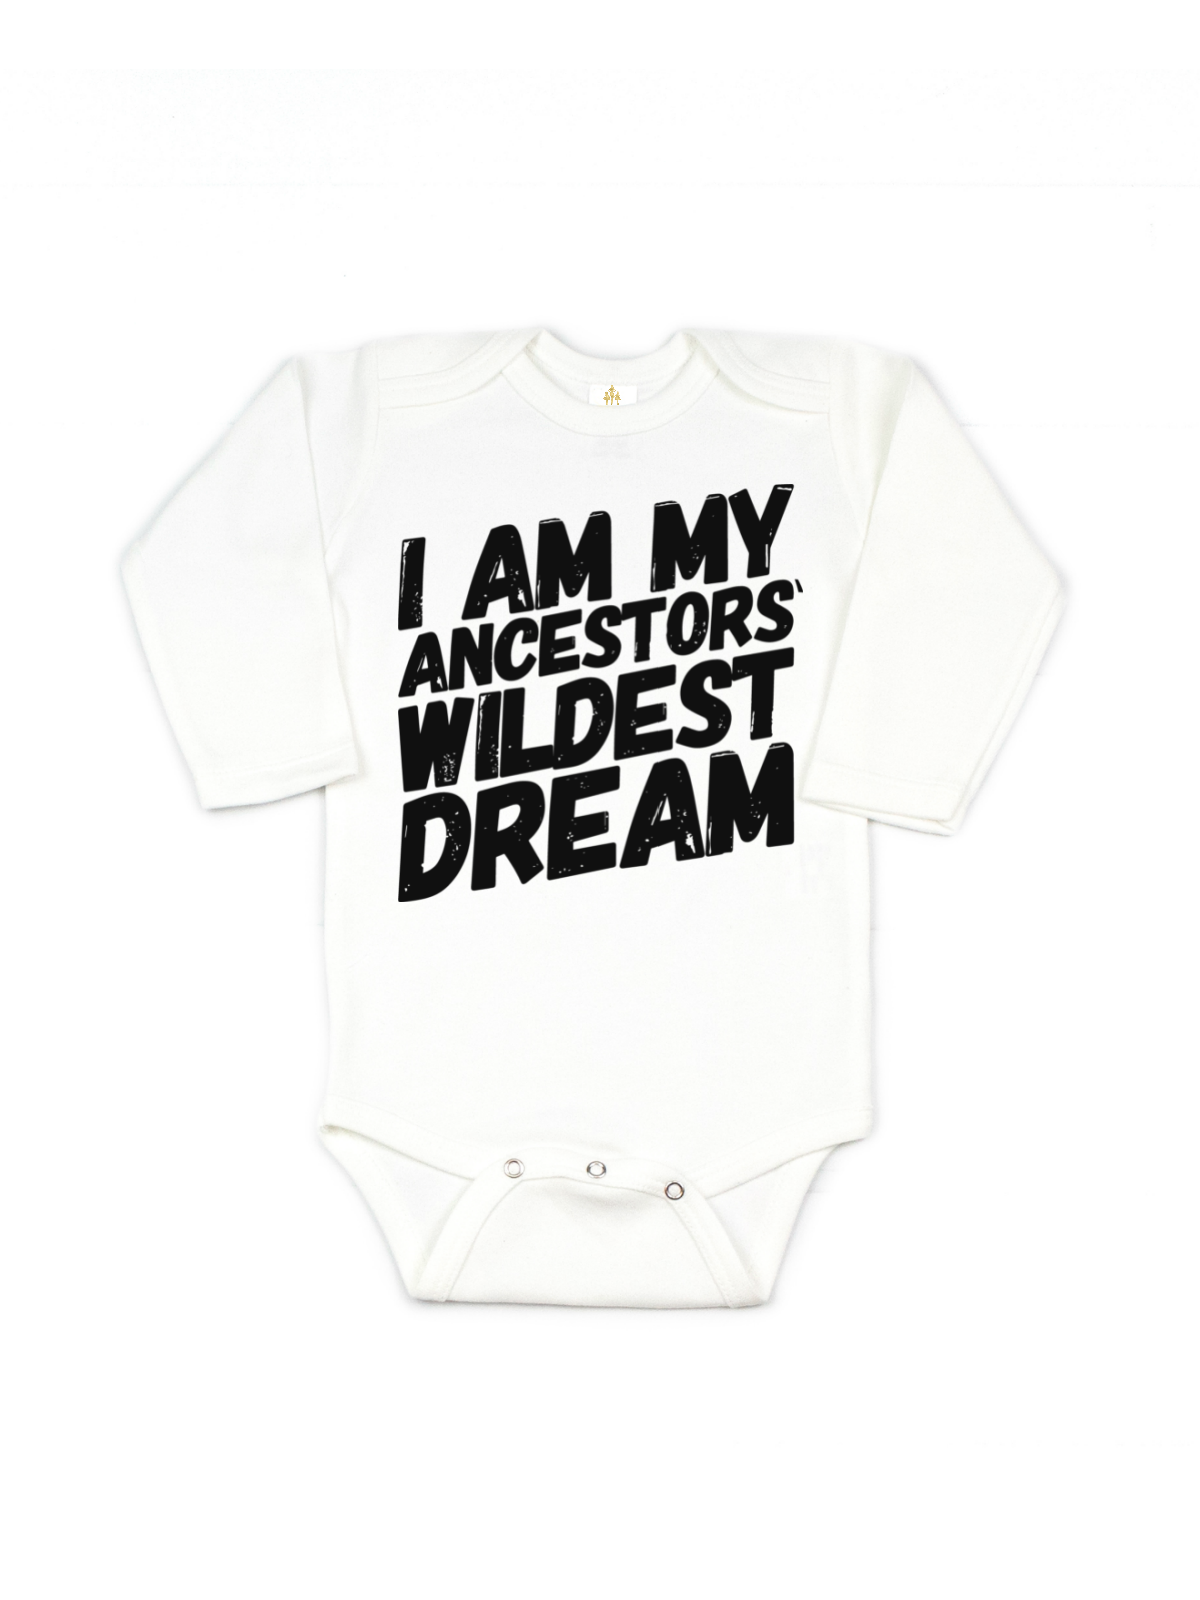 I Am My Ancestors' Wildest Dream Infant Black History Bodysuit